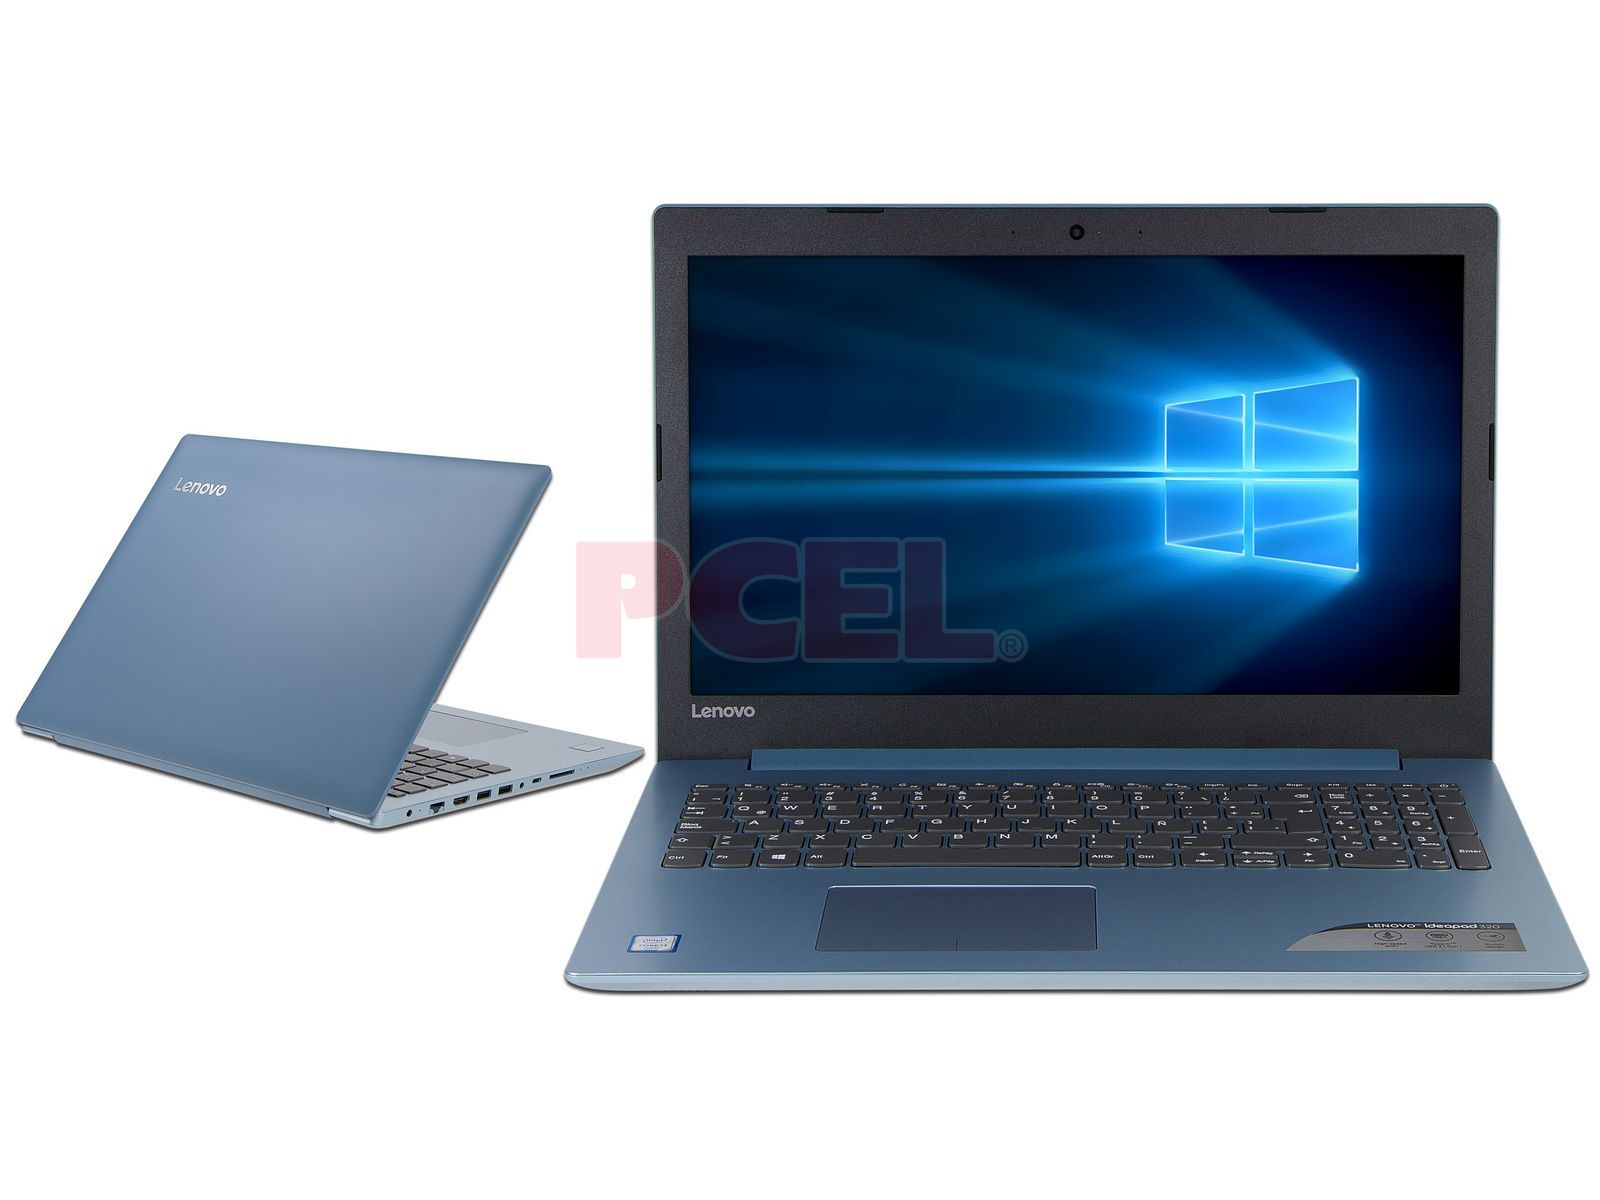 Imperio Inca influenza Venta ambulante Laptop Lenovo IdeaPad 320-15ISK: Procesador Intel Core i3 6006U (2.0 GHz),  Memoria de 4GB DDR3L, Disco Duro de 1TB, Pantalla de 15.6" LED, Video Intel  HD Graphics 520, S.O. Windows 10 Home (64 Bits)